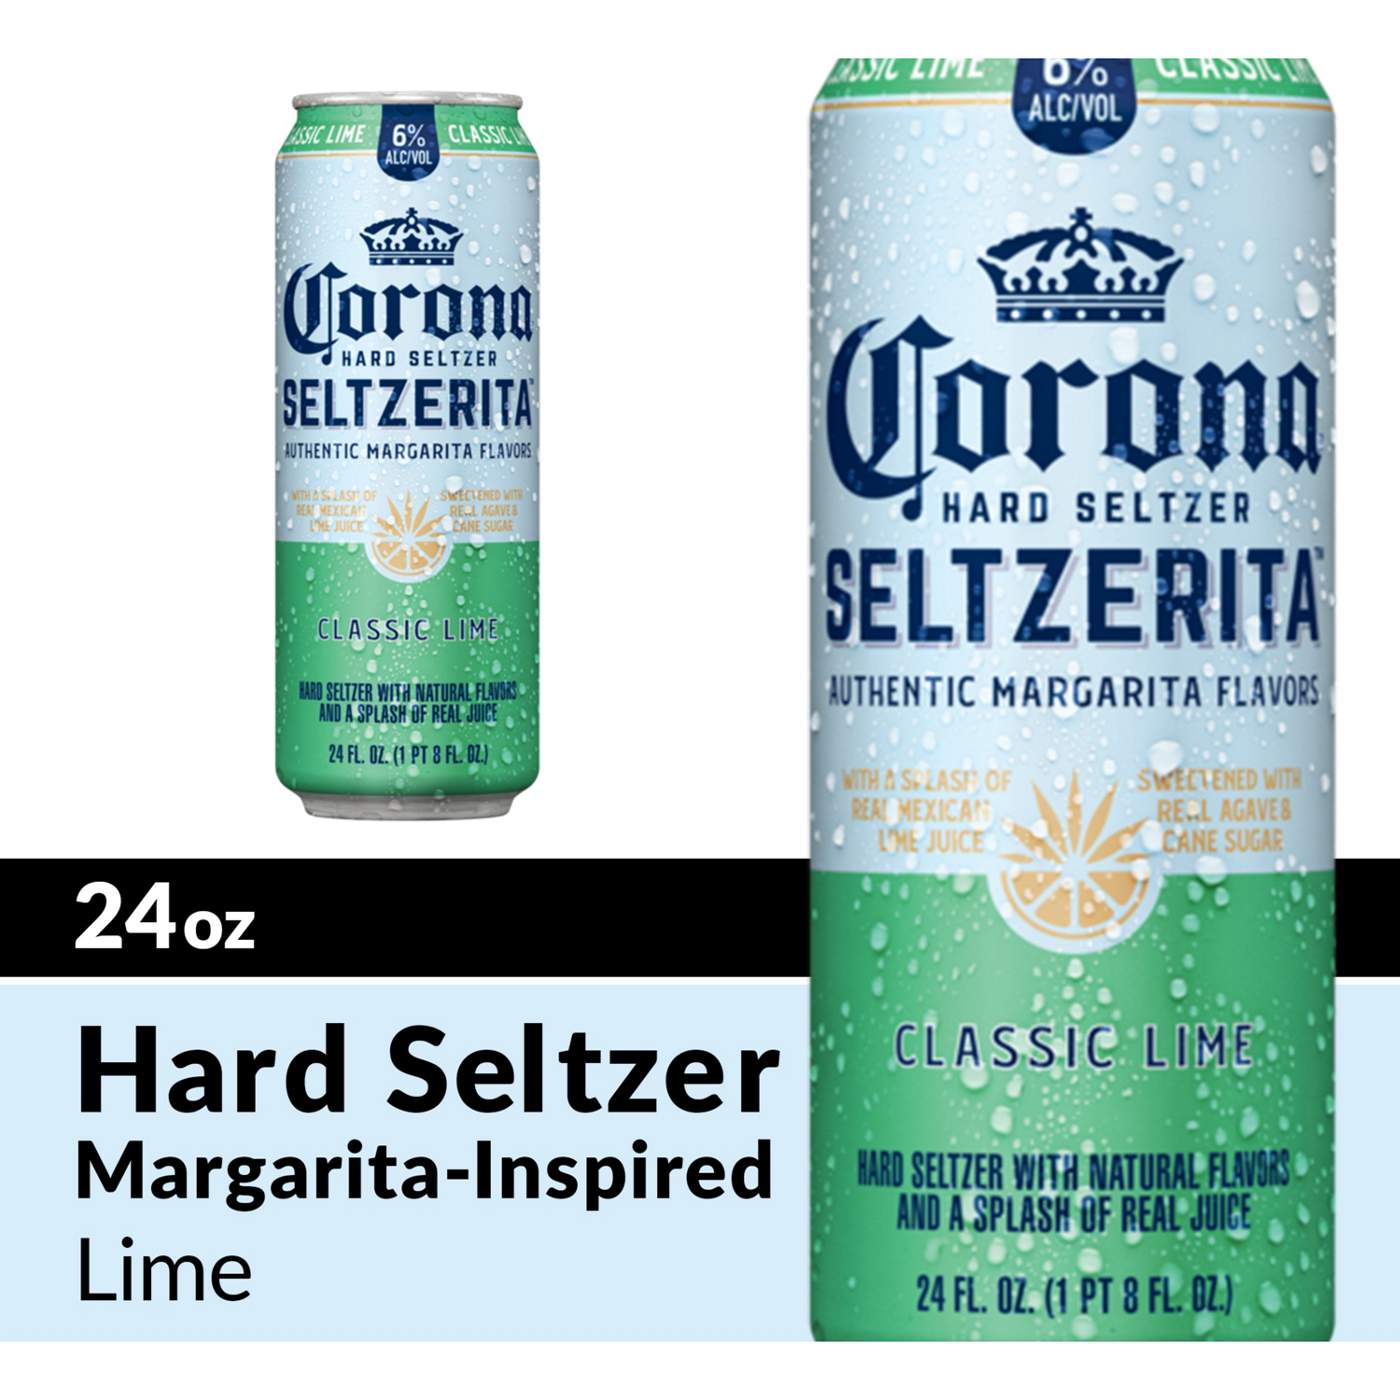 Corona Hard Seltzer Seltzerita Classic Lime Gluten Free 24 oz Can; image 6 of 7